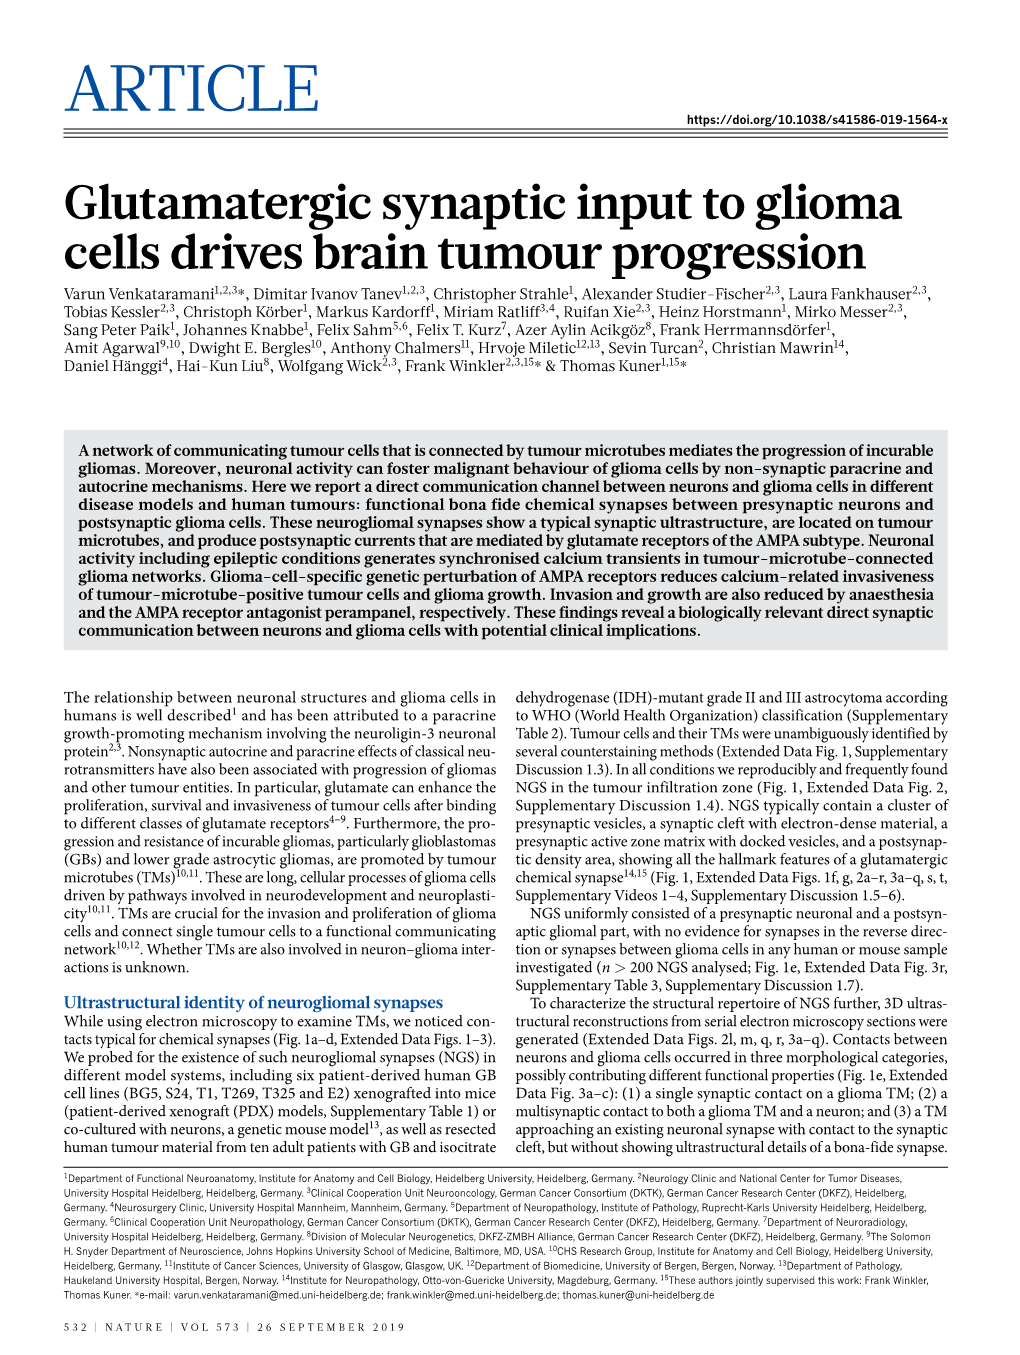 Glutamatergic Synaptic Input to Glioma Cells Drives Brain Tumour Progression